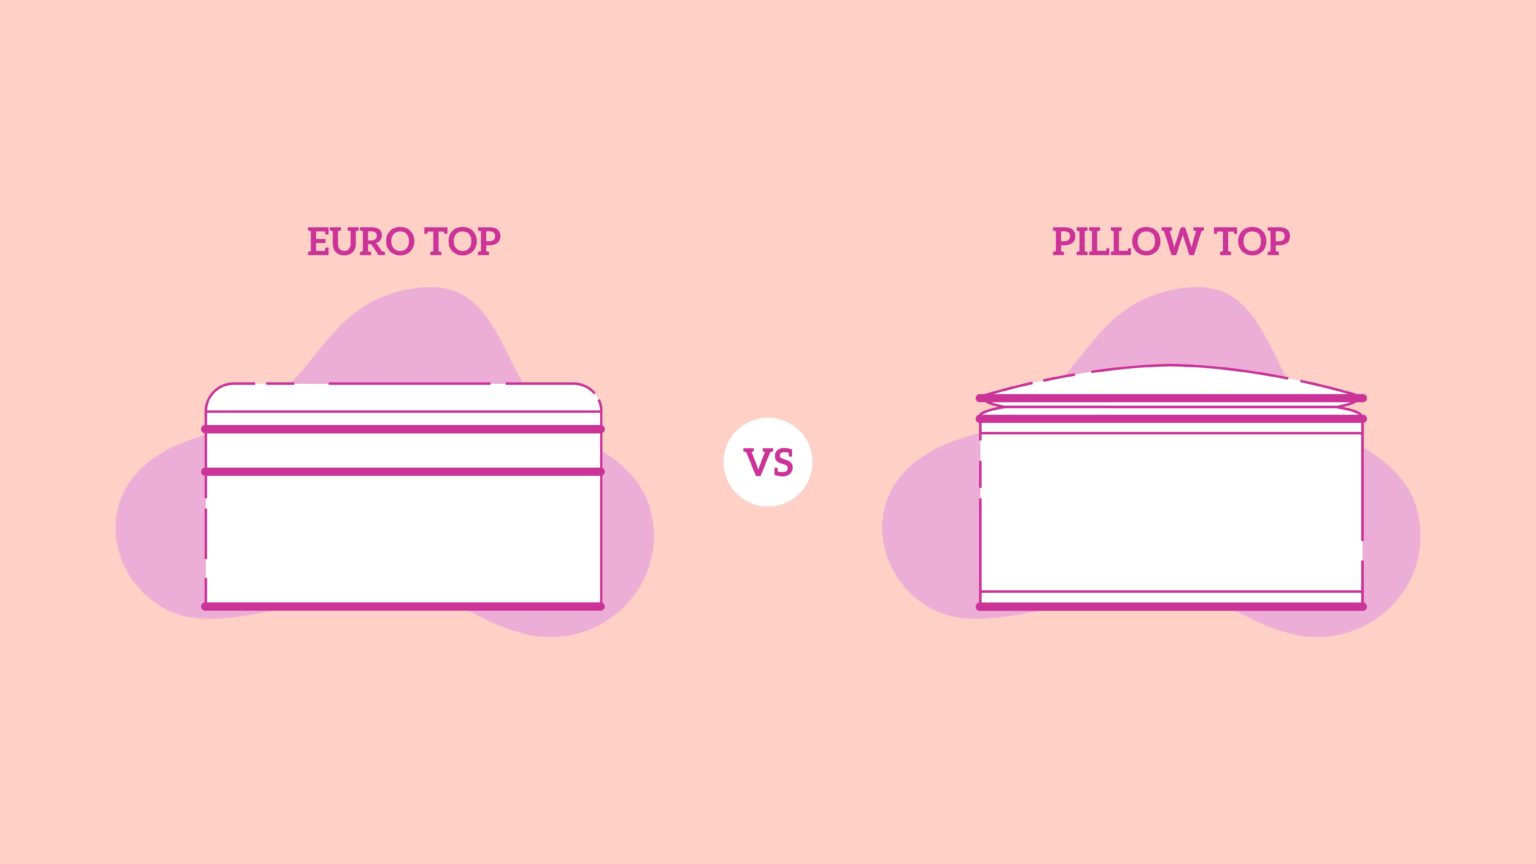 quilted top vs euro pillow top mattress